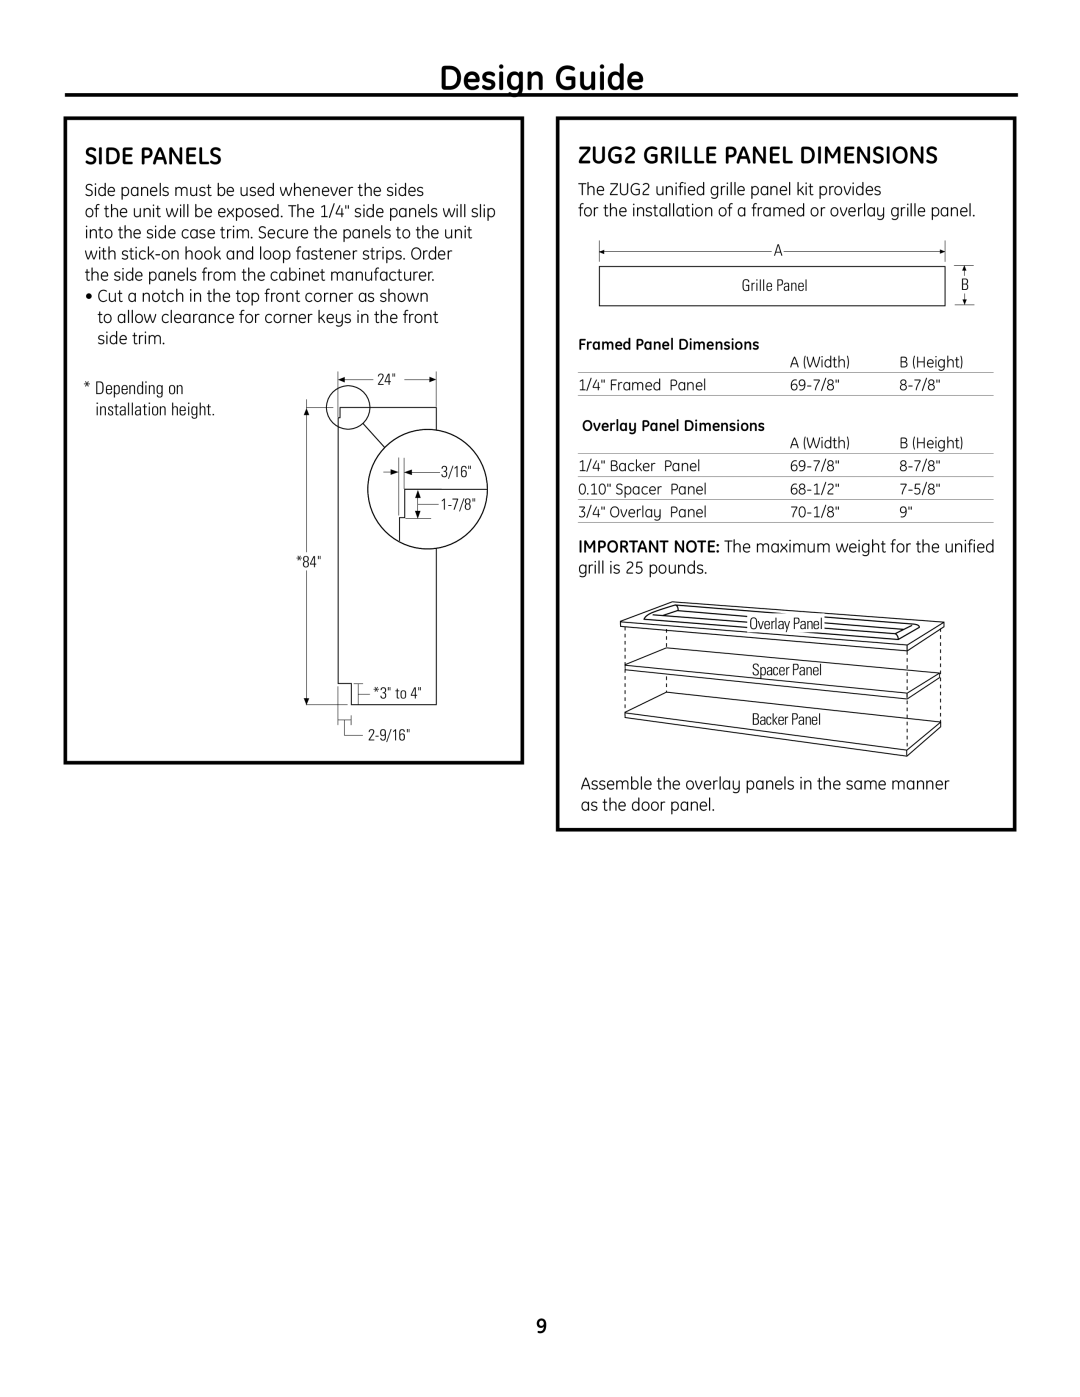 GE Monogram Built-In All-Refrigerator/Freezer Side Panels, ZUG2 GRILLE PANEL DIMENSIONS, Design Guide 